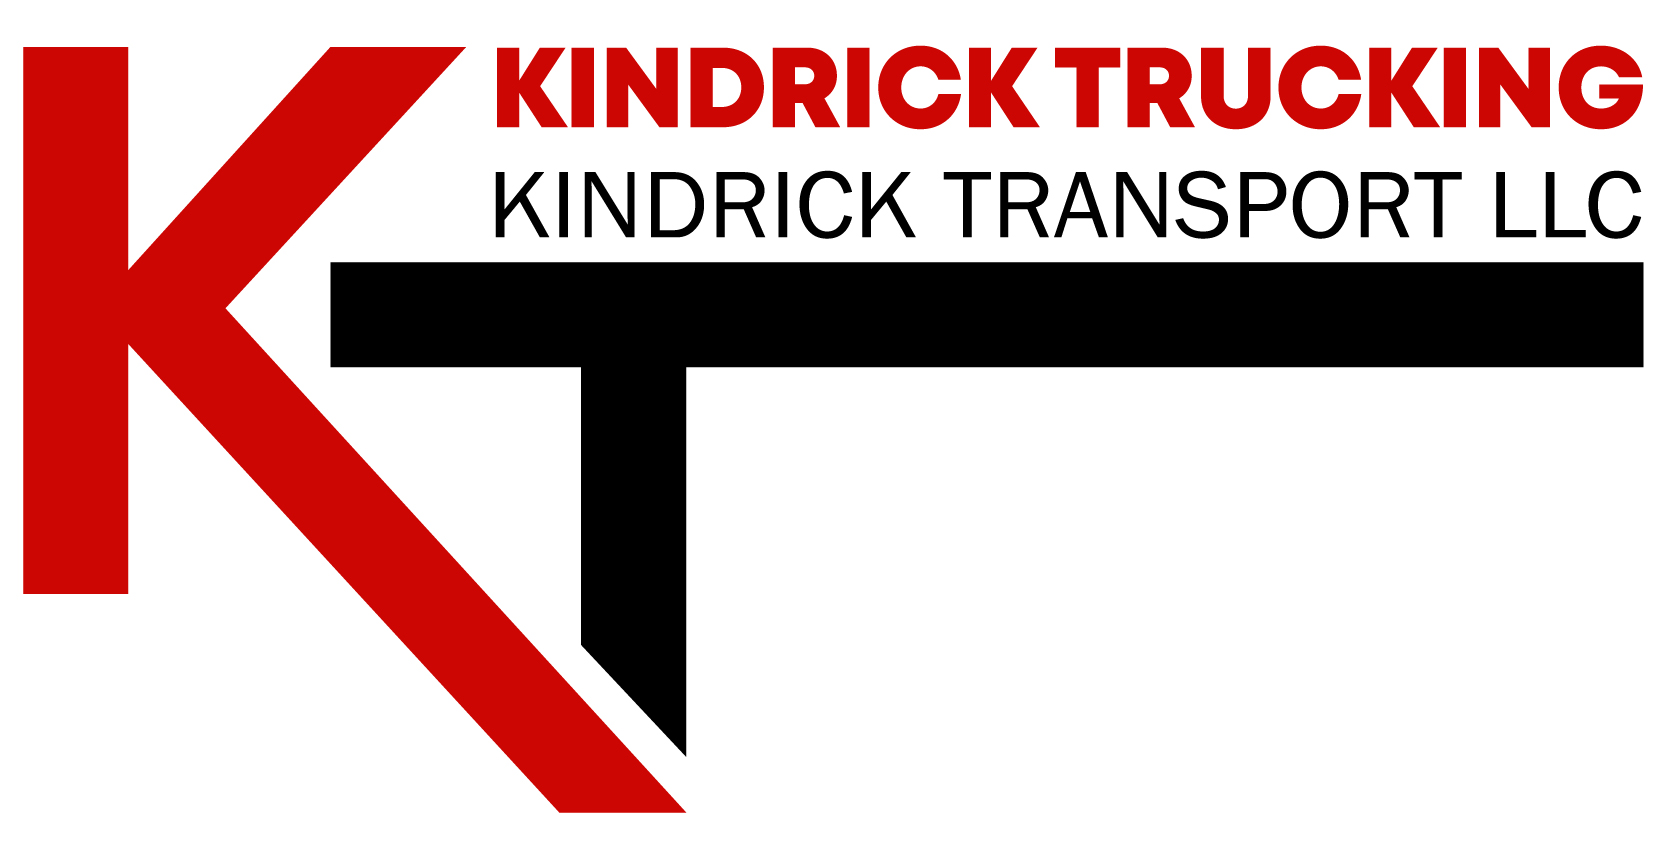 KINDRICK TRANSPORT LLC